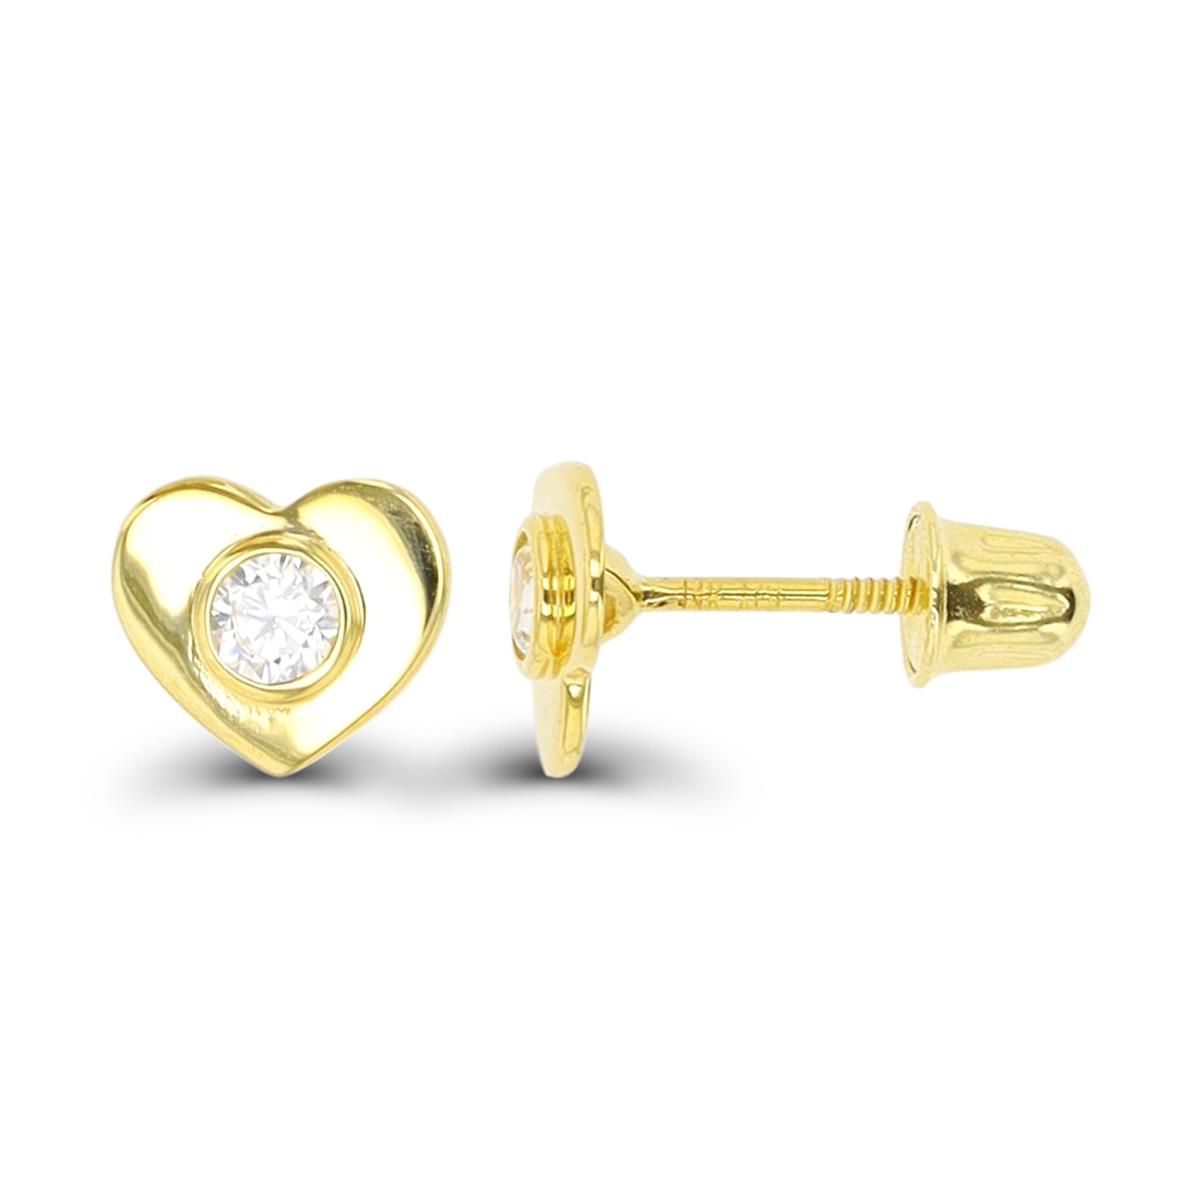 10K Yellow Gold Heart Screwback Stud Earring